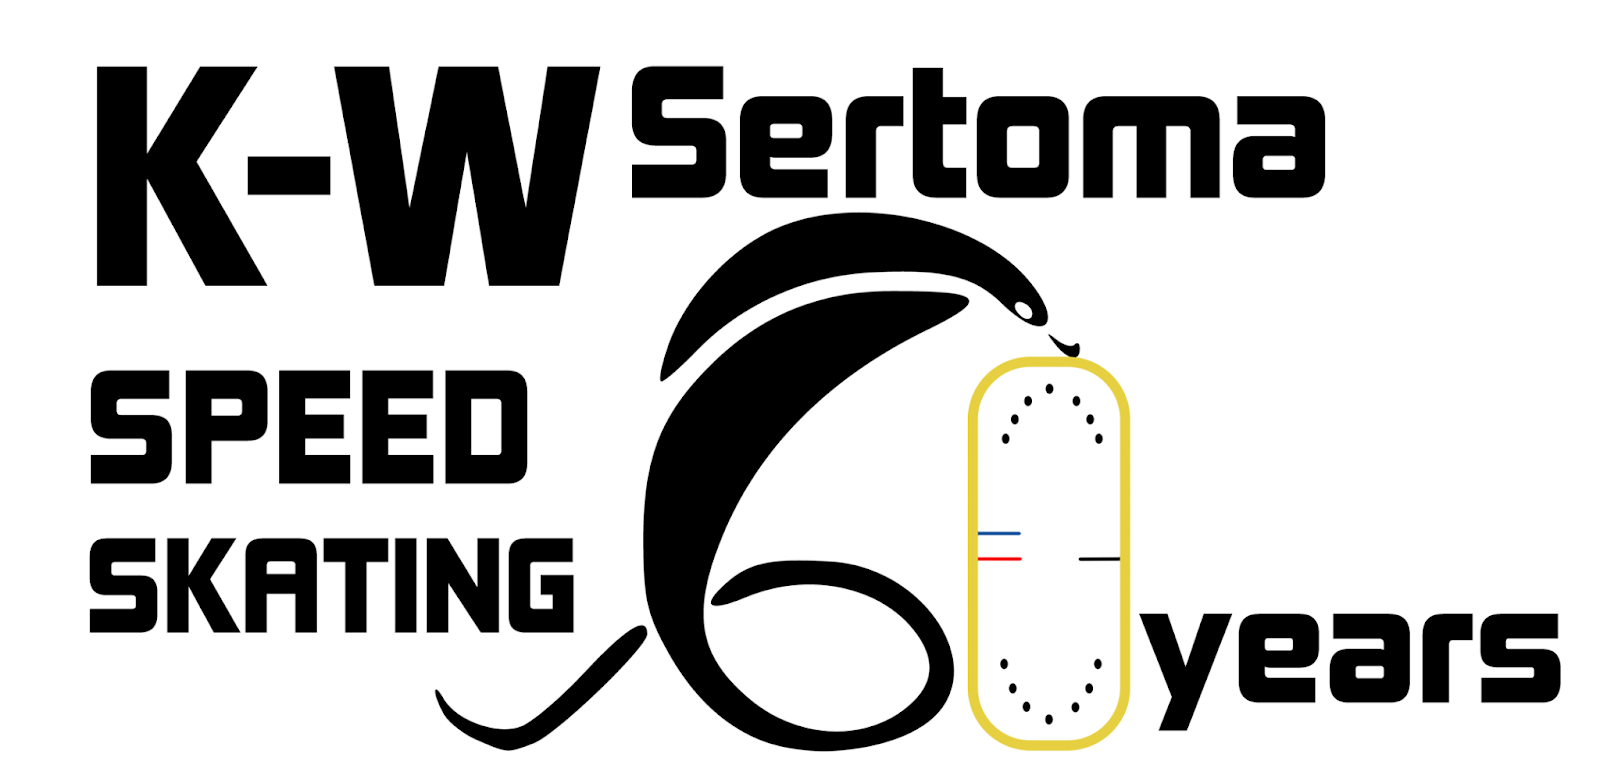 KW Sertoma speed skating